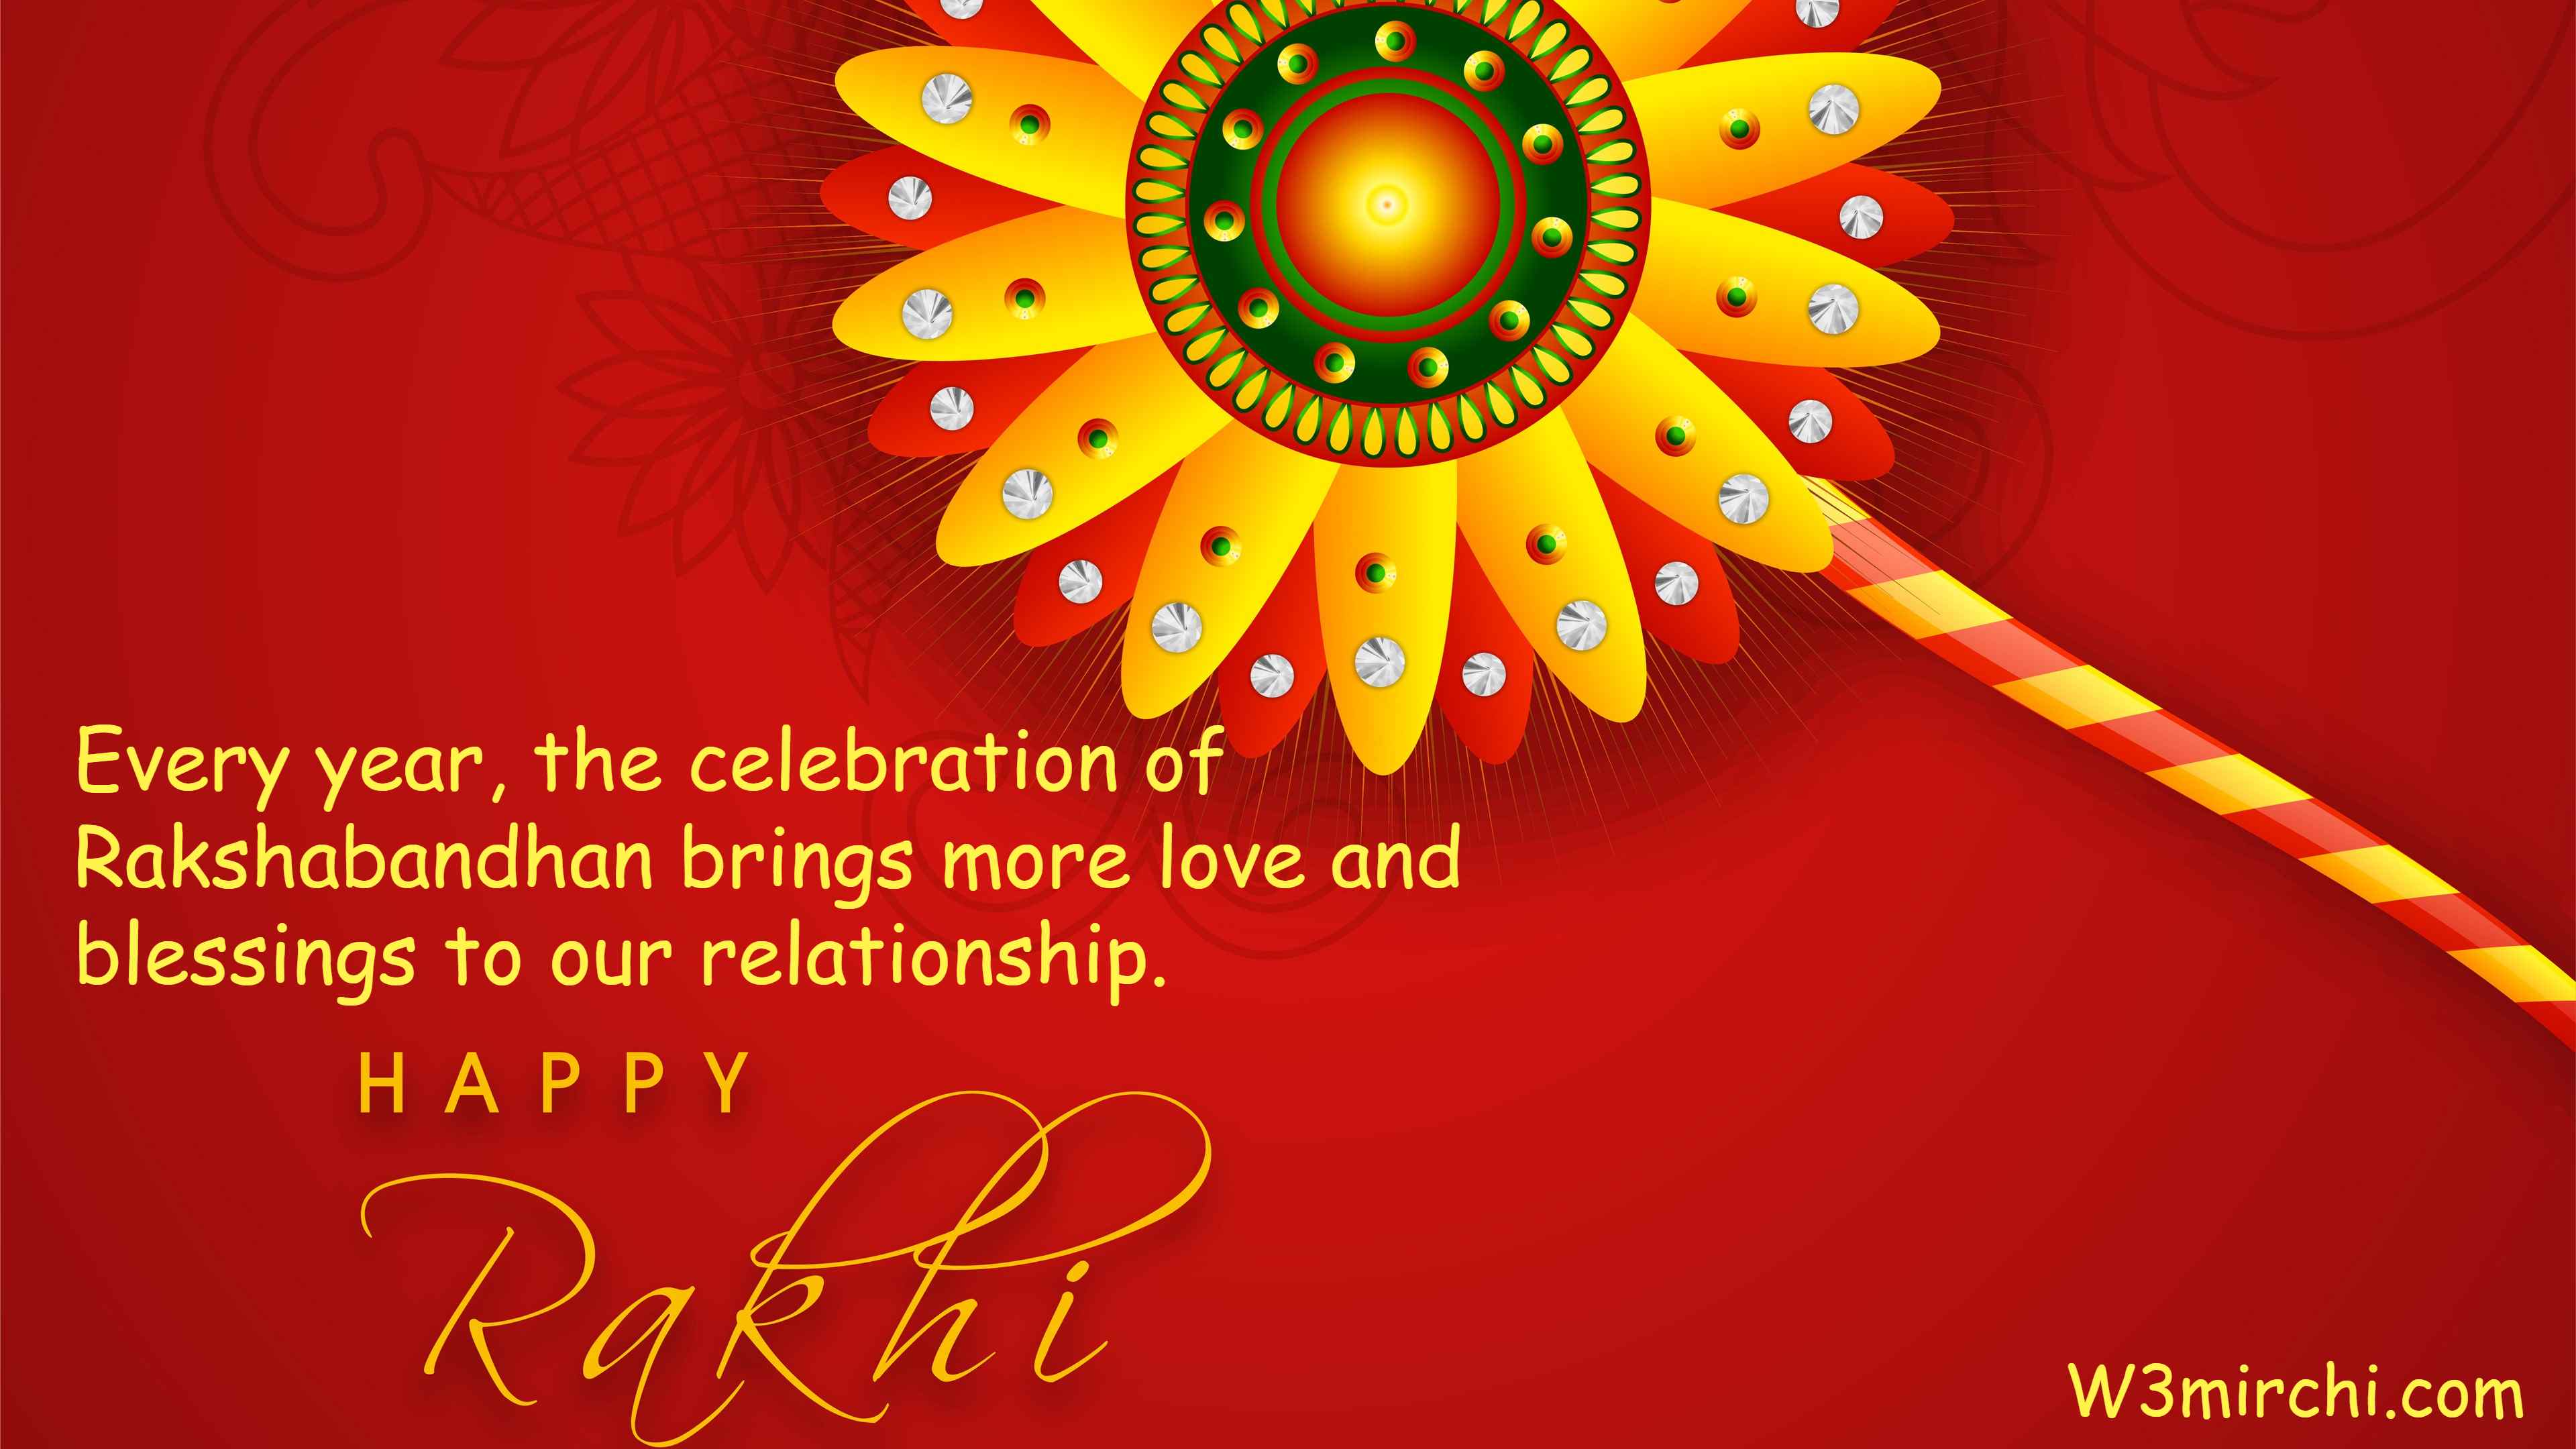 Every year, the celebration of Raksha Bandhan